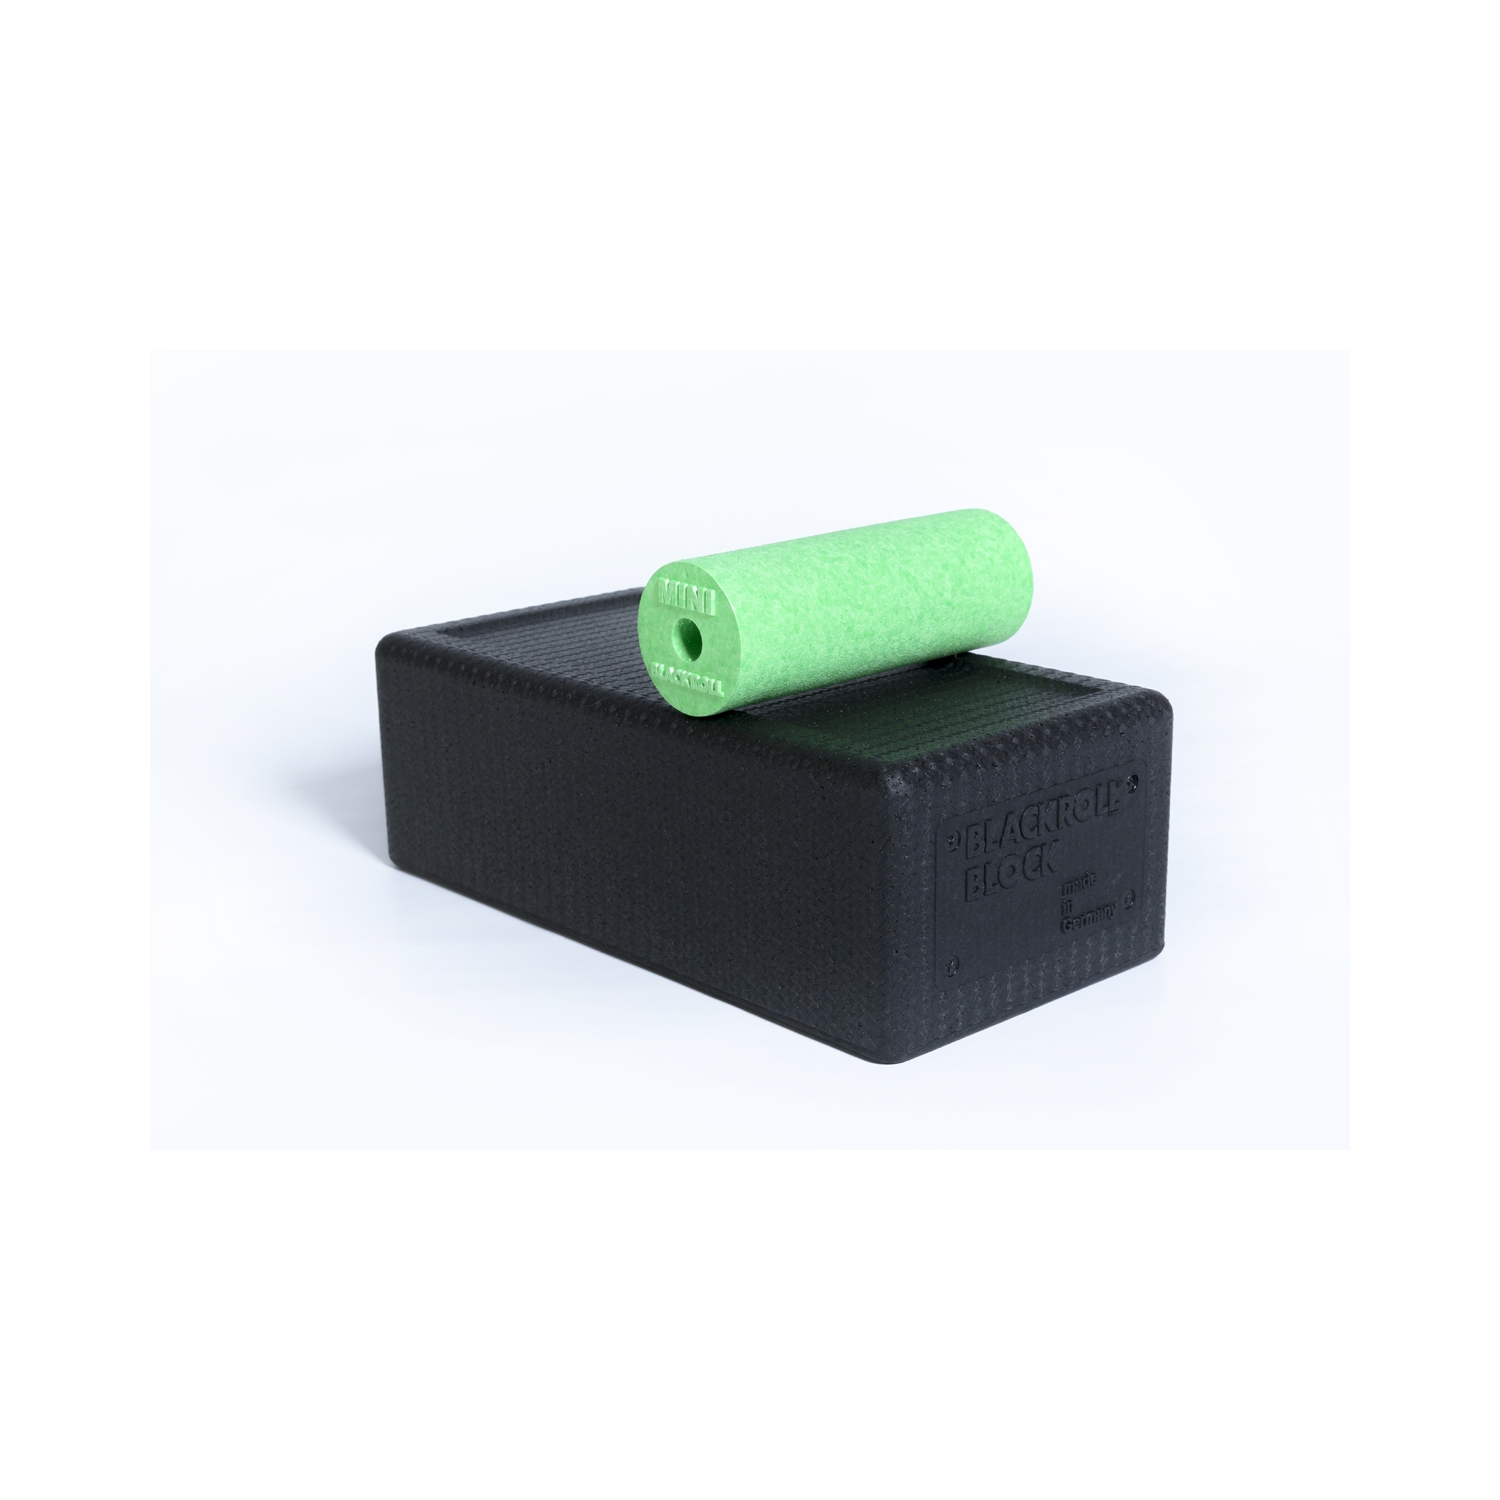 Blackroll Set Block - Mini - ball - noir/vert/rose